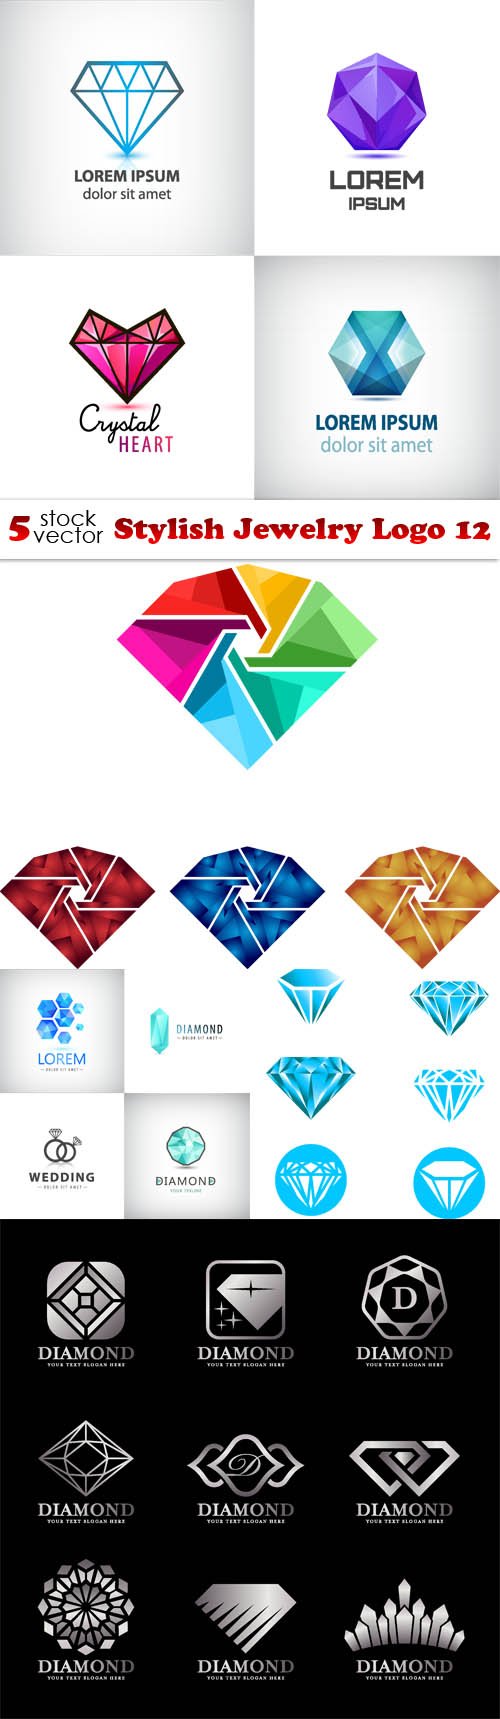 Vectors - Stylish Jewelry Logo 12